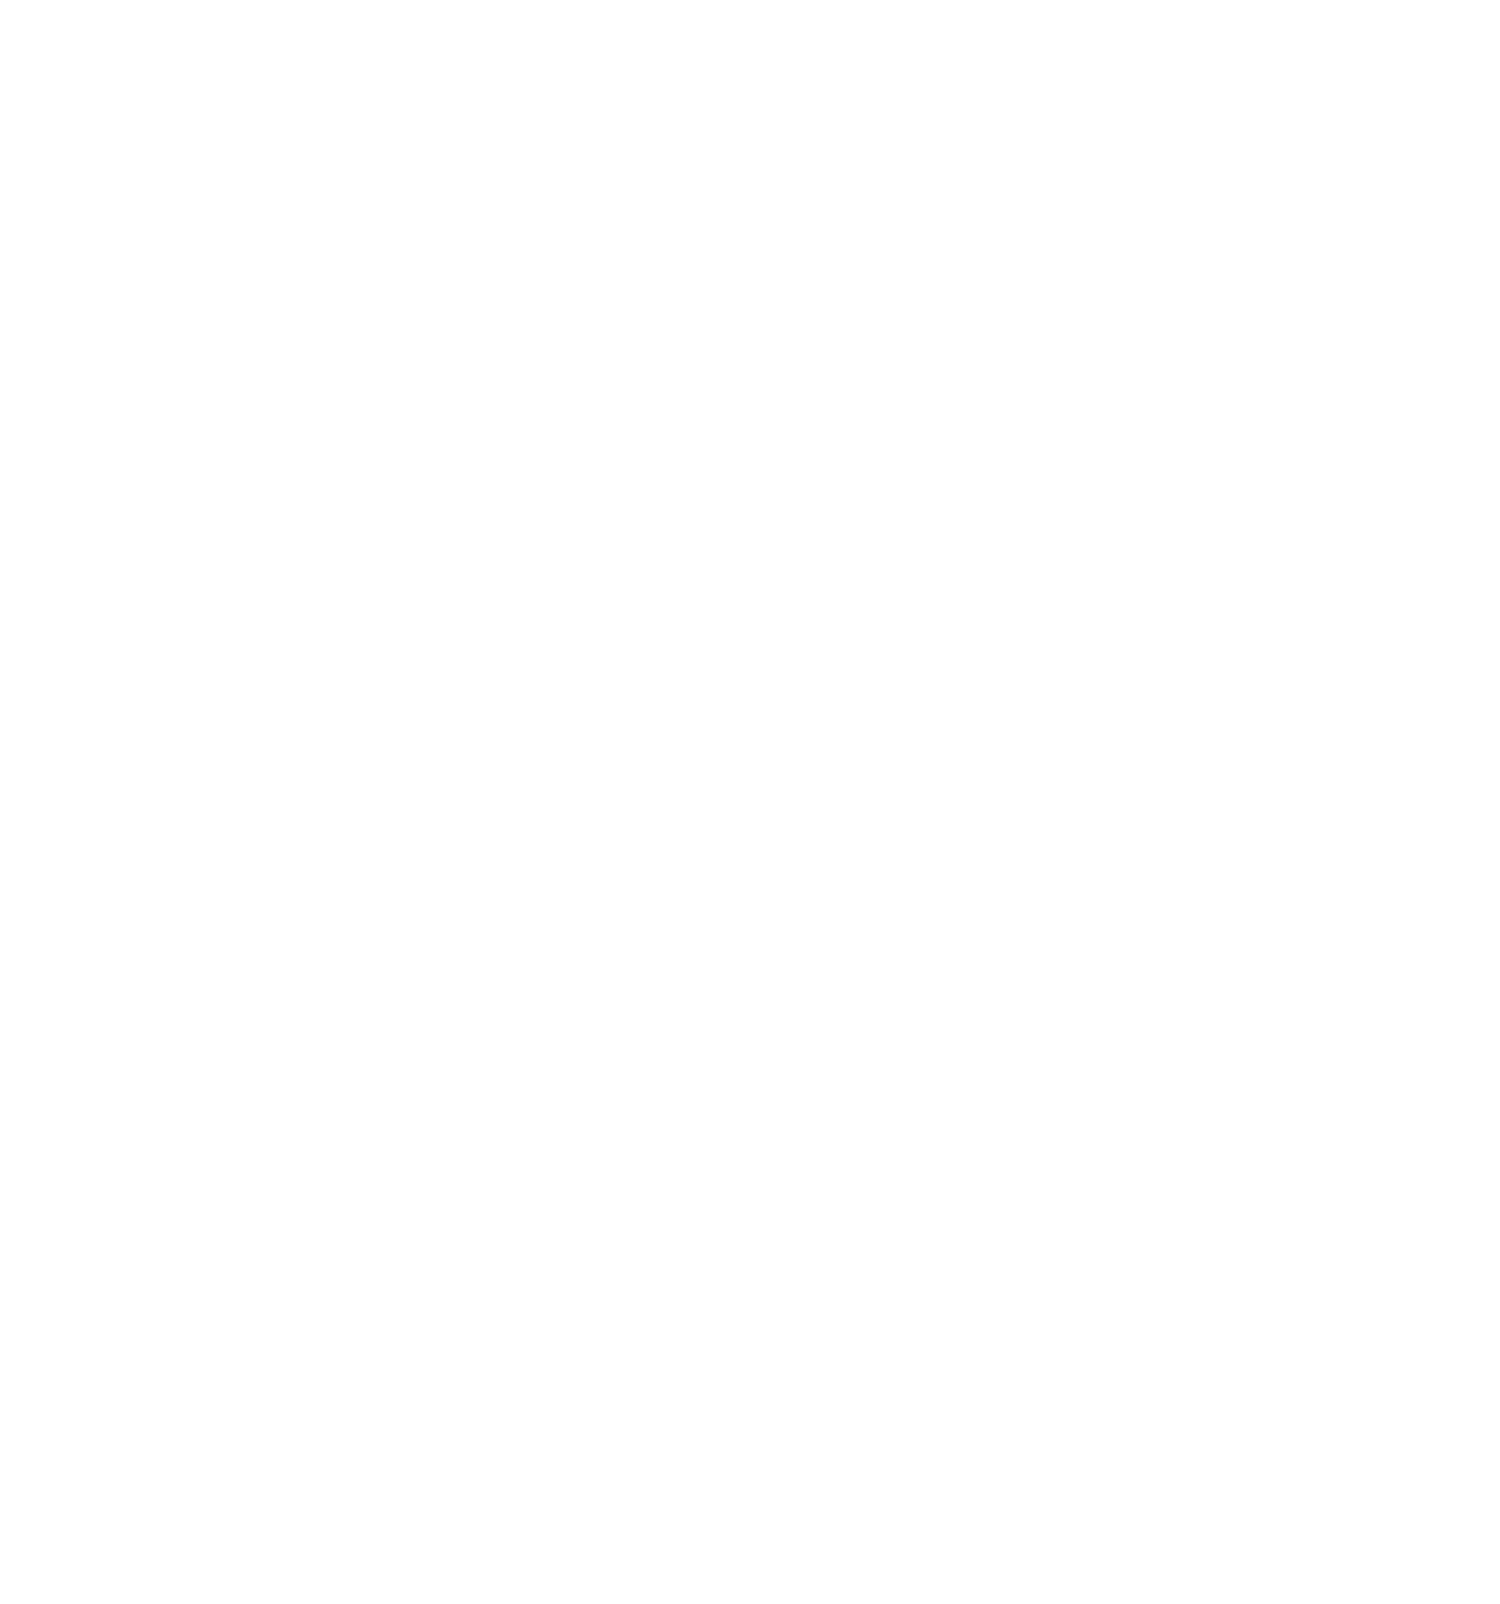 The Healing Body Method